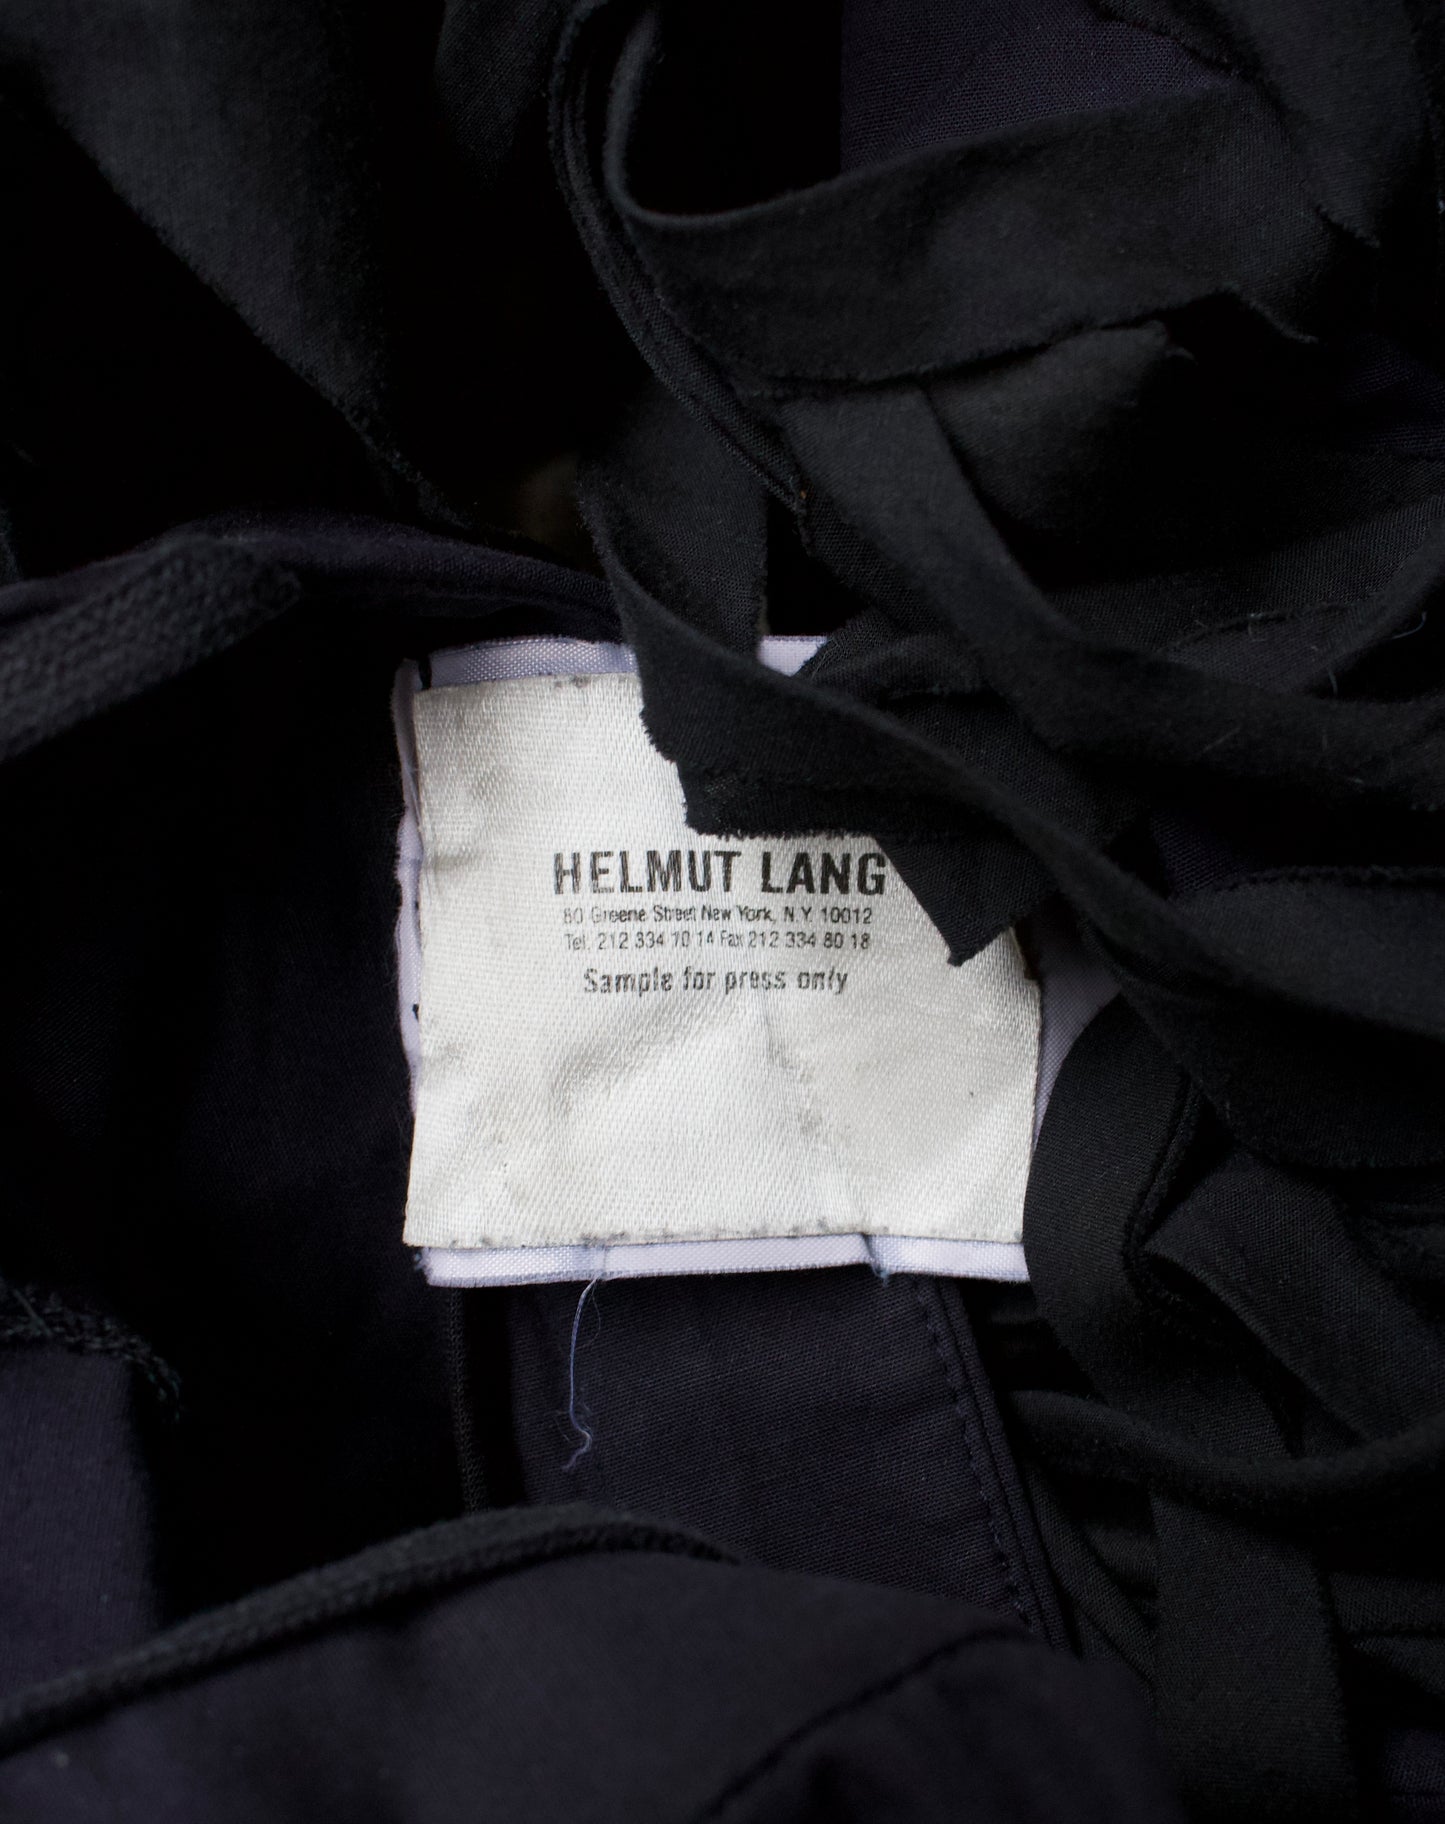 Helmut Lang SS04 Sample Mummy Bondage Strap Pants